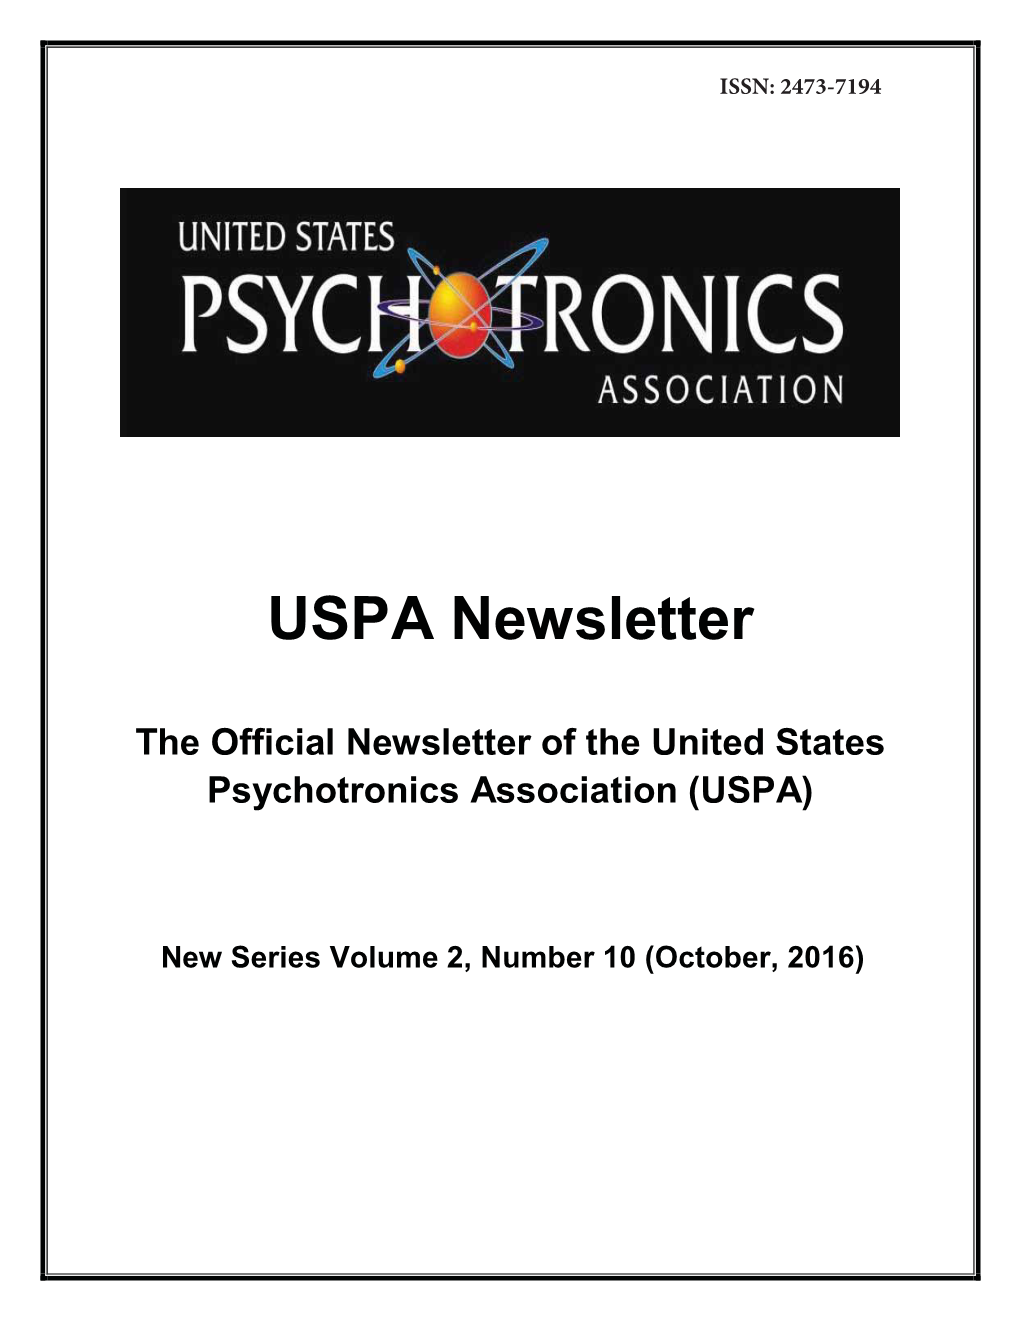 USPA Newsletter